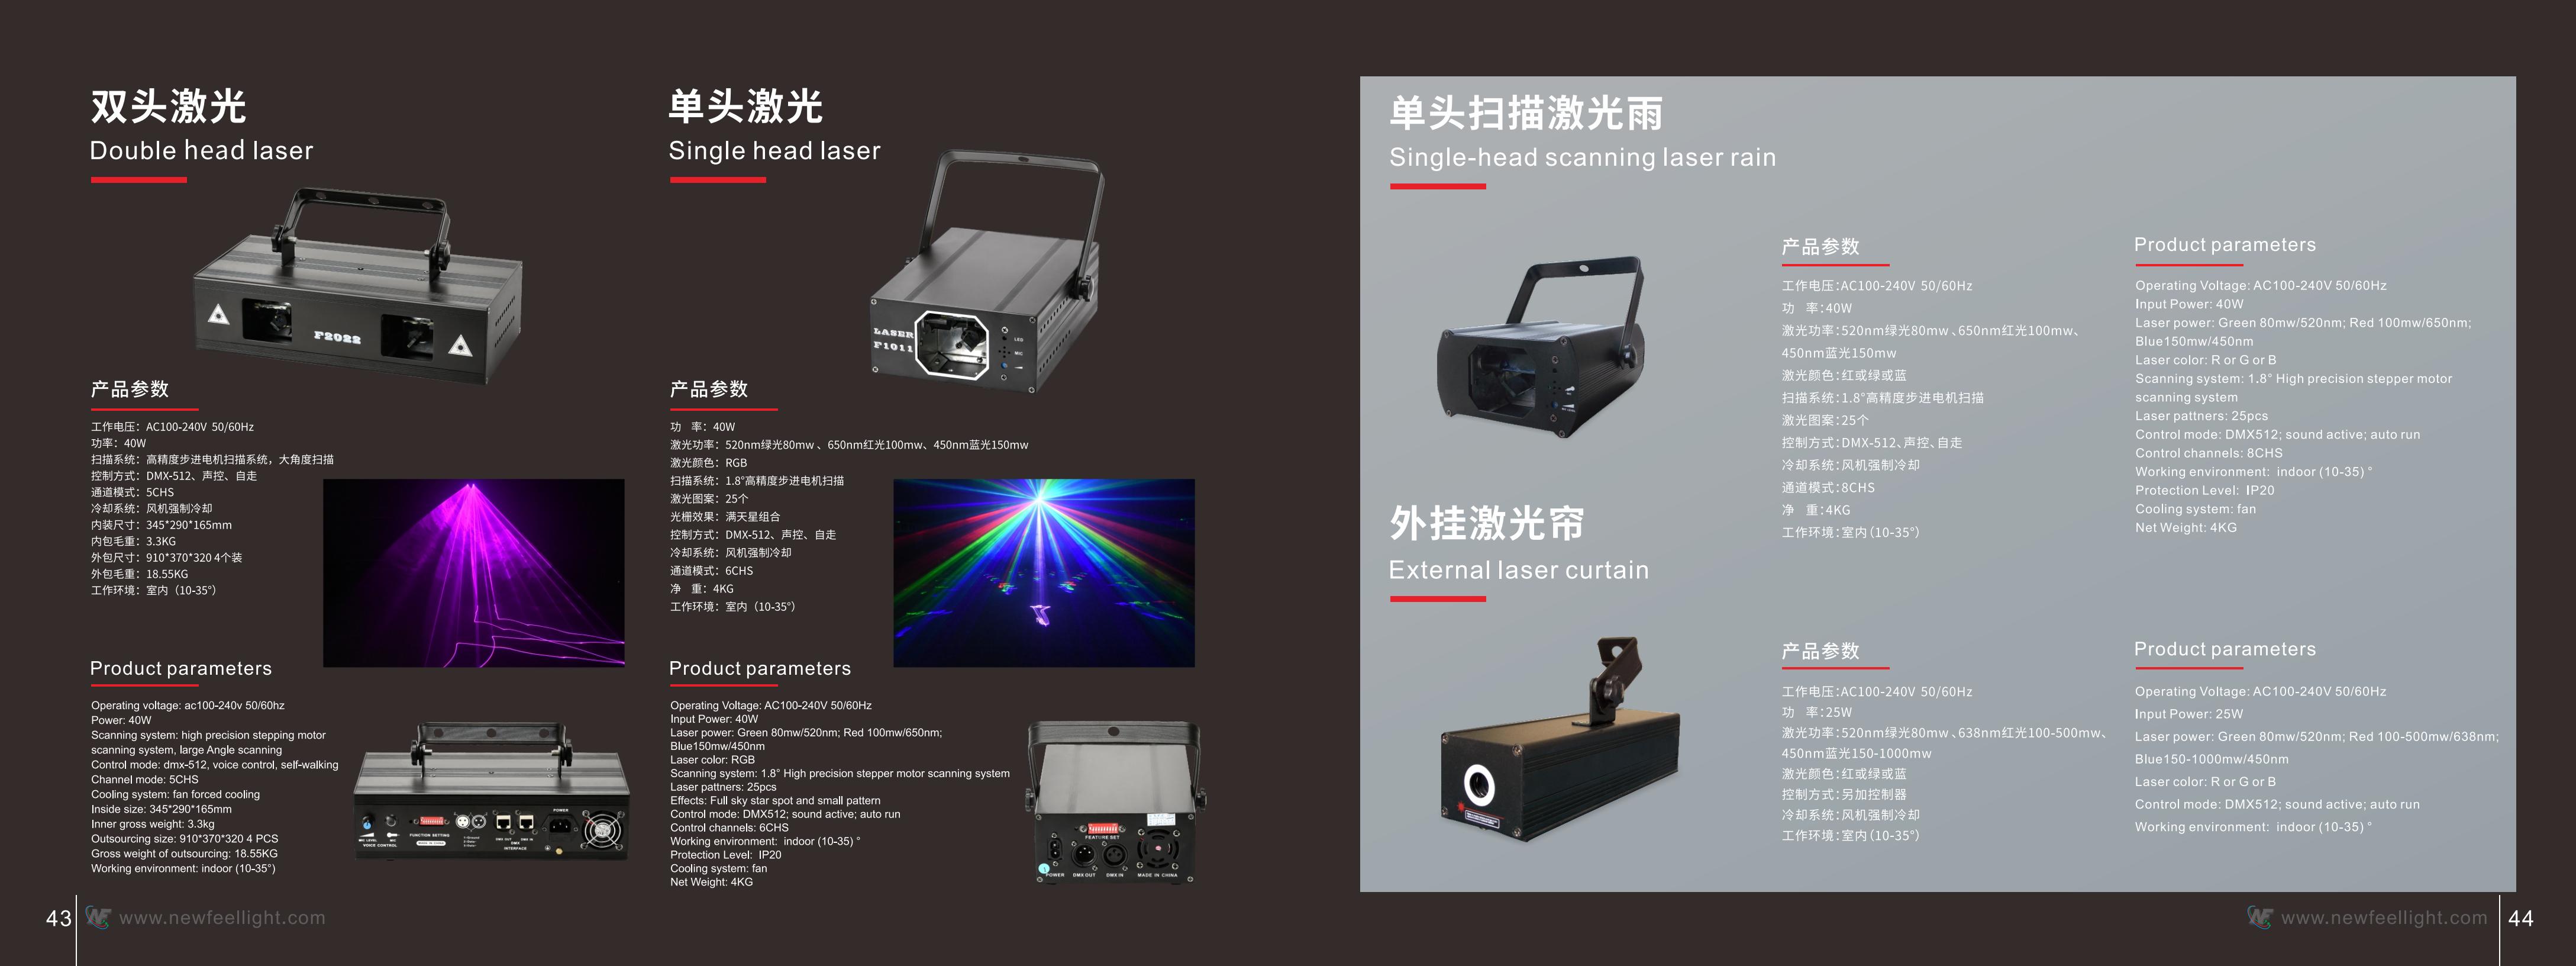 NewFeel Laser Light Product Catalogue_23.jpg